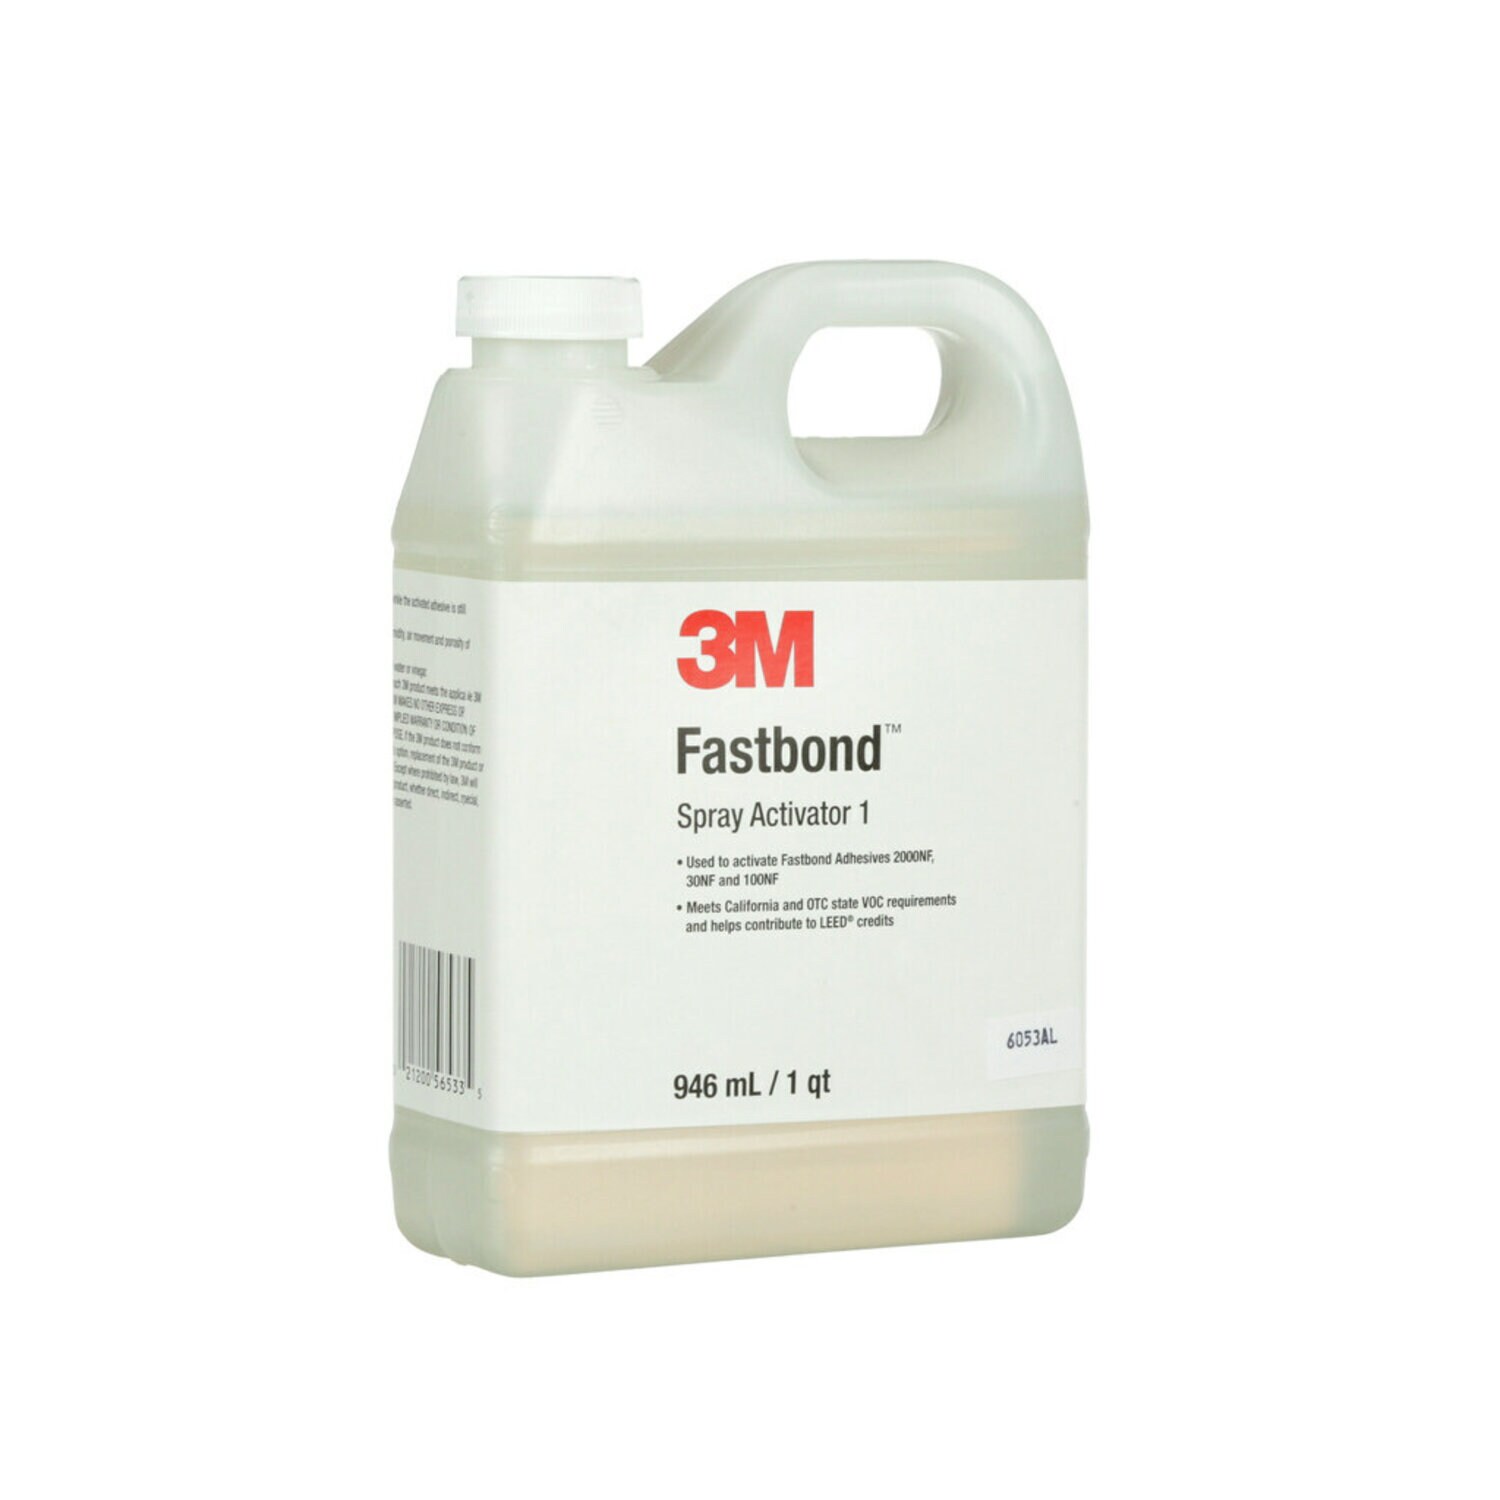 7000028593 - 3M Fastbond Spray Activator 1, 1 Quart, 2 Bottle/Case